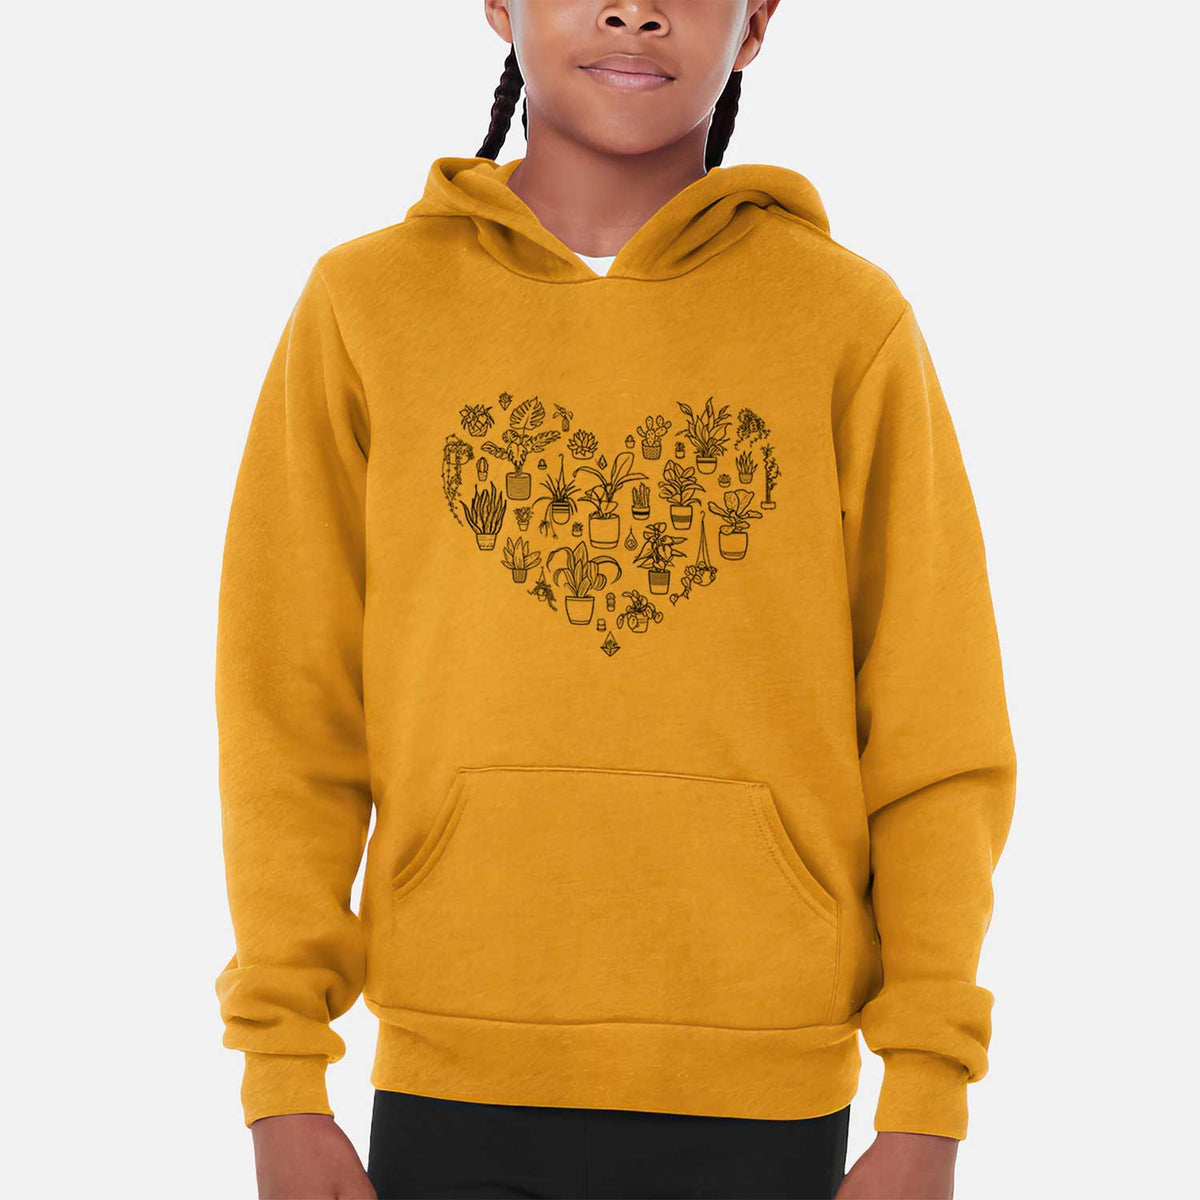 Heart Full of House Plants - Youth Hoodie Sweatshirt